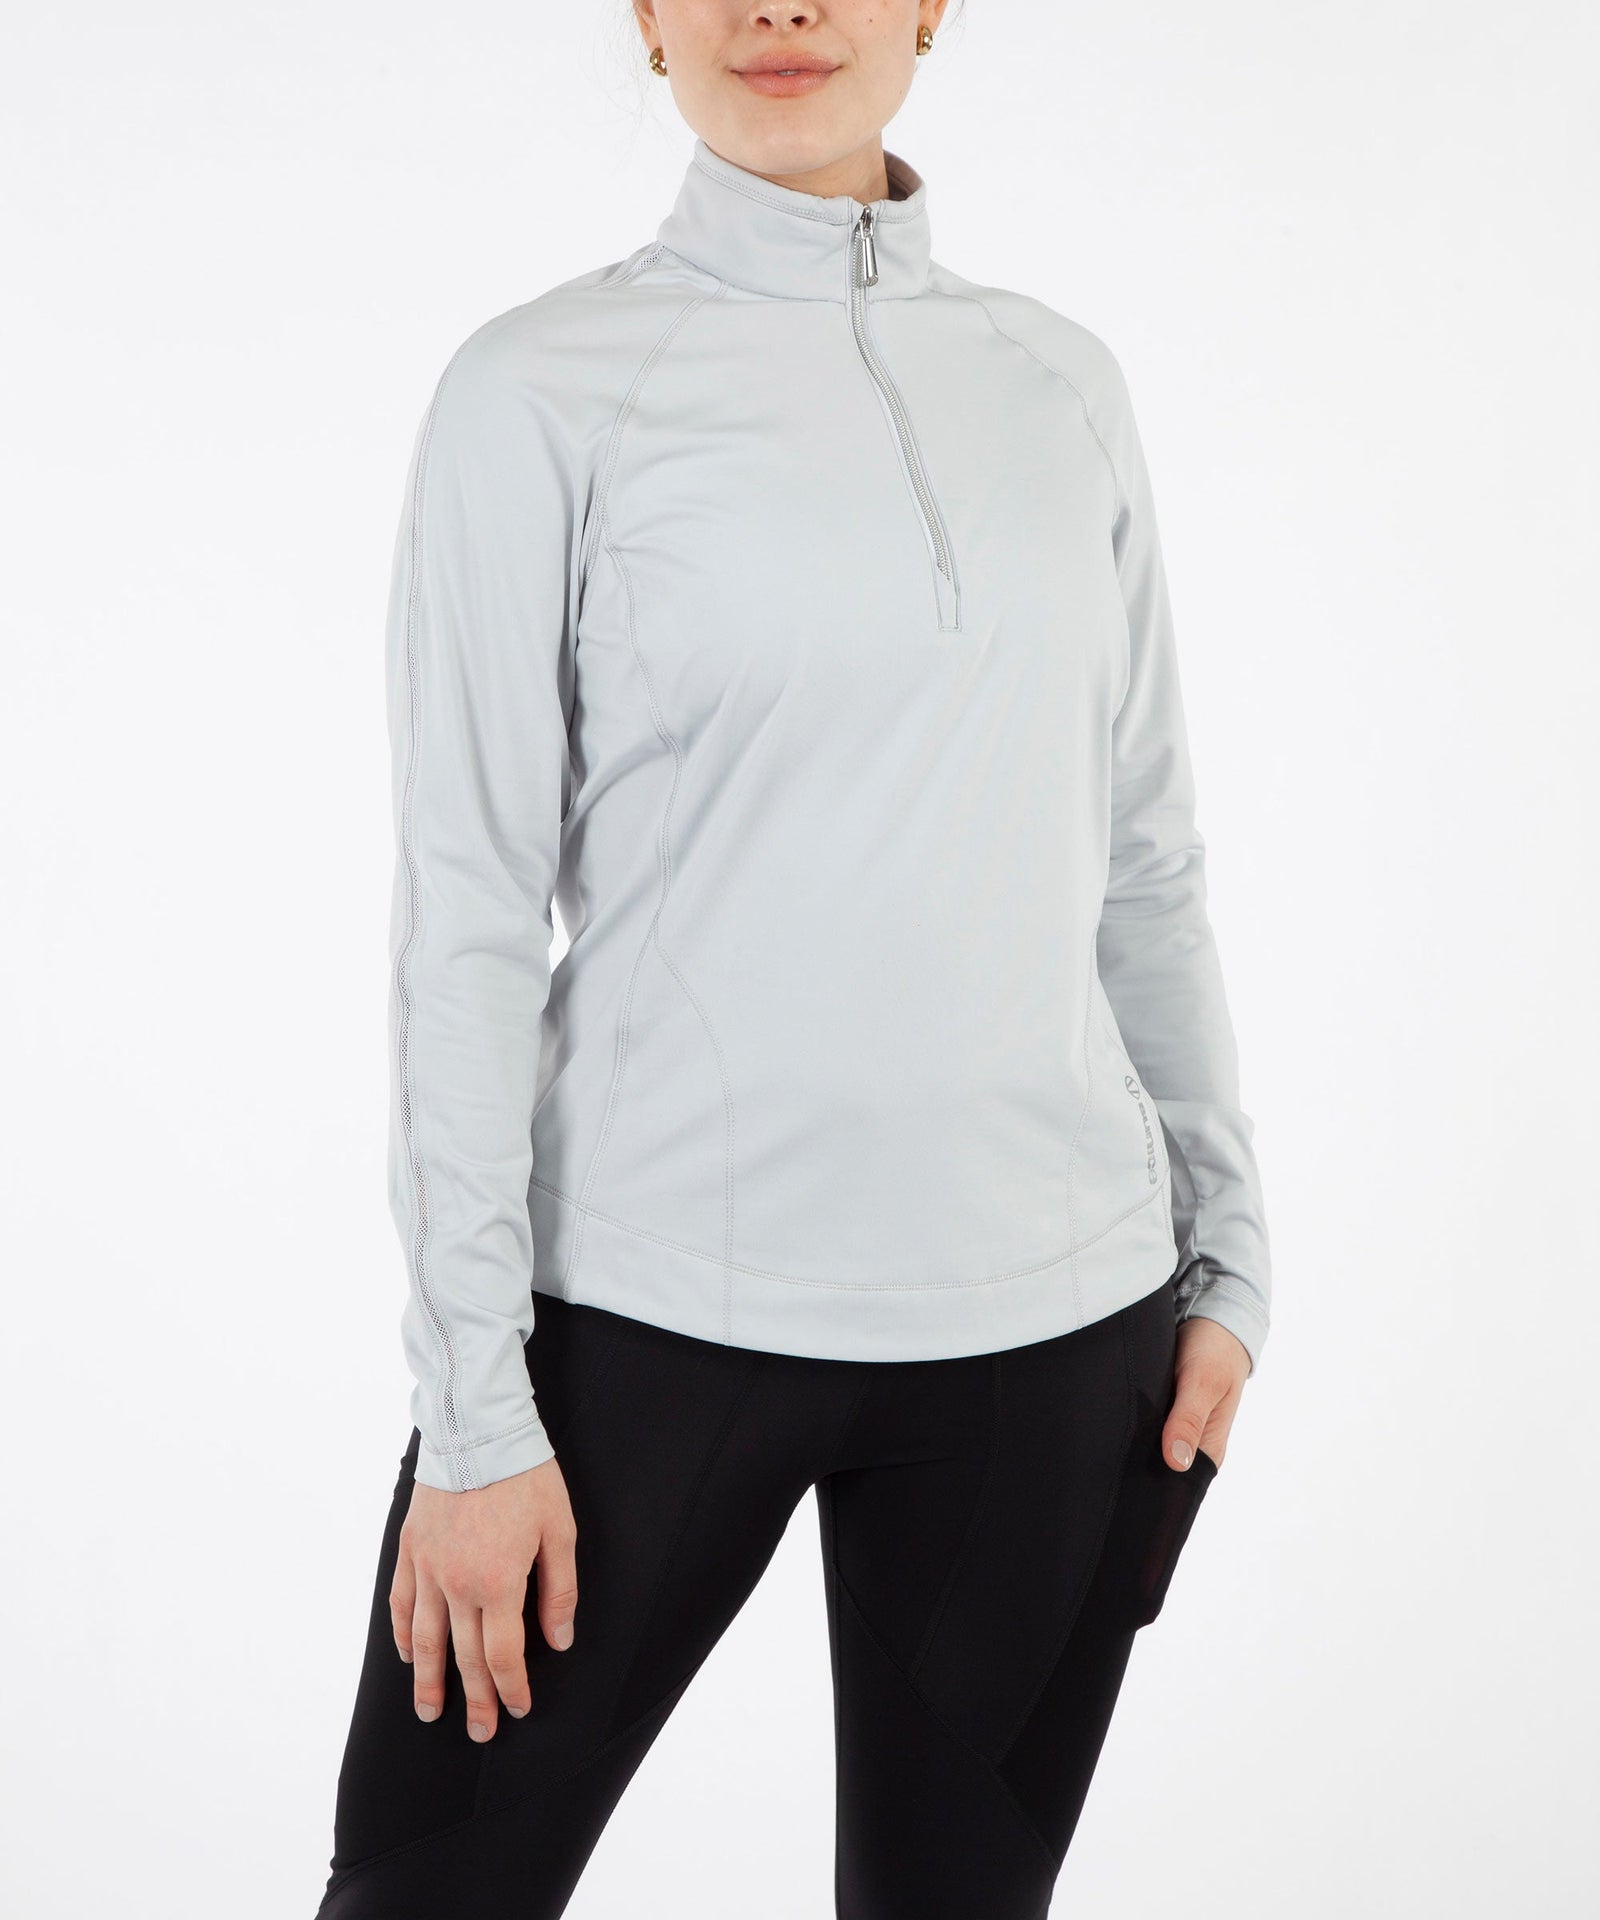 Sunisery Women's Half Zip Up Fleece Lined Hoodies Long Sleeve Crop Sweater  Tops Pullover Workout Sweatshirt with Thumb Hole